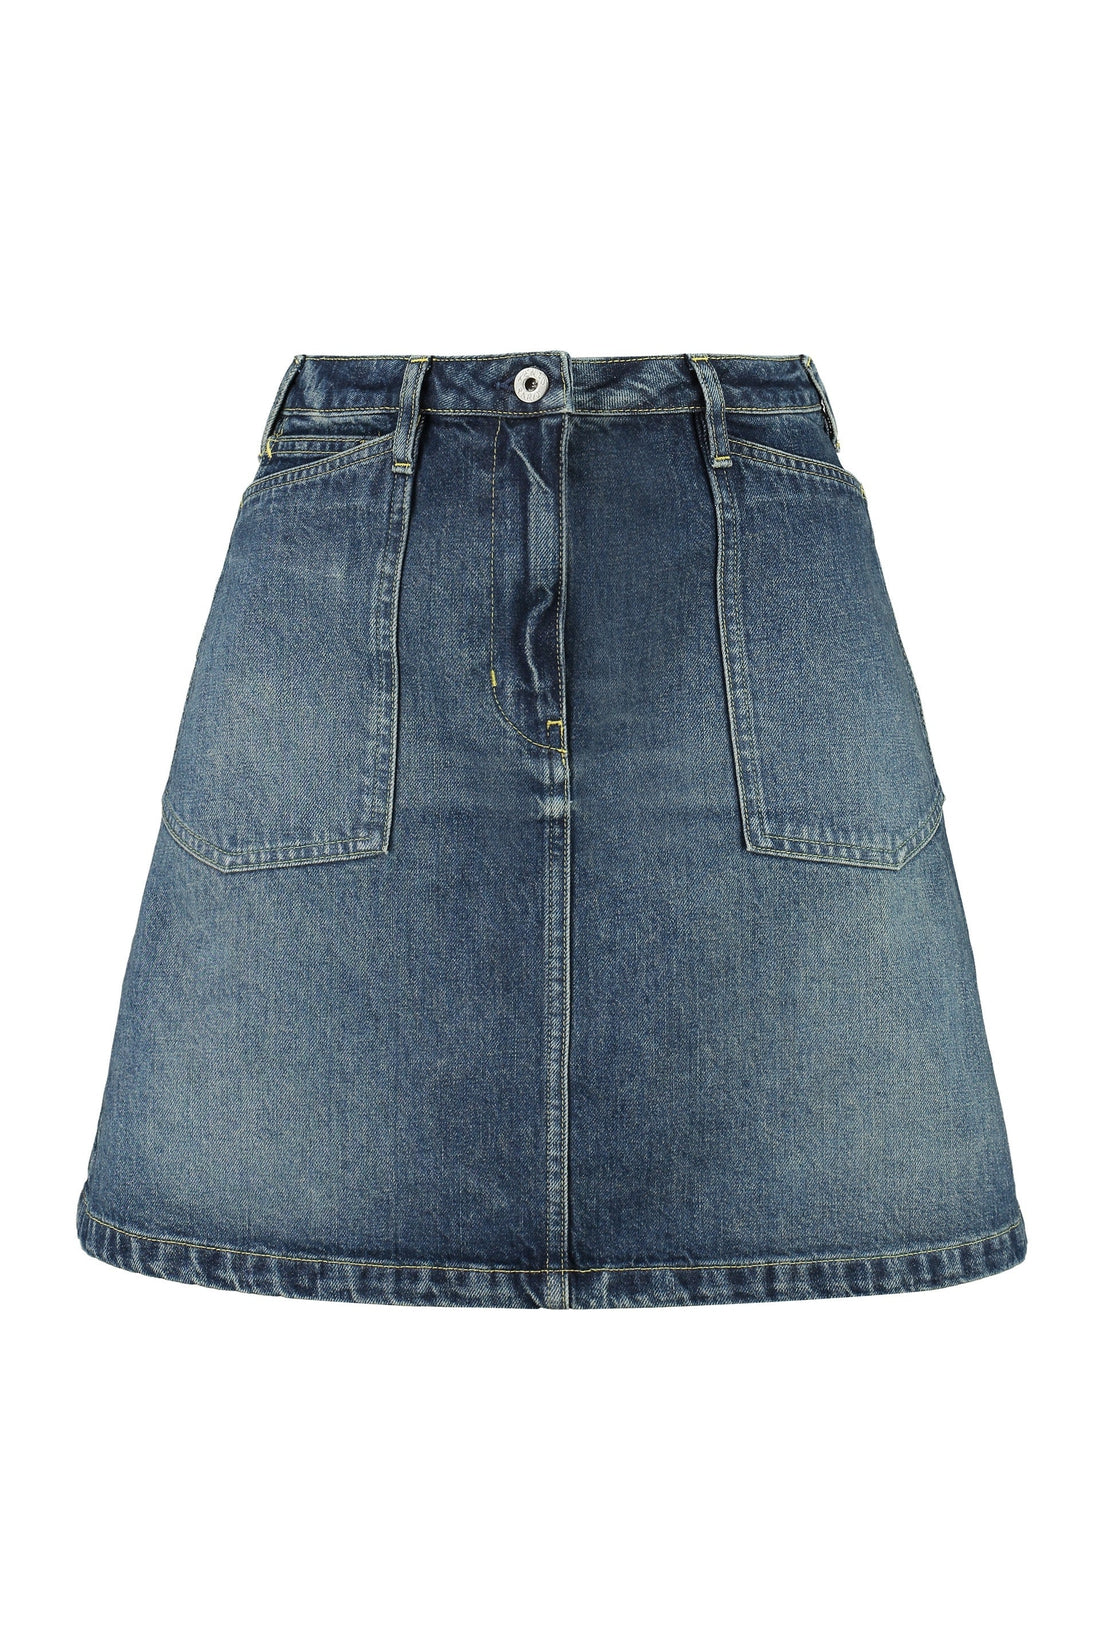 Kenzo-OUTLET-SALE-Denim mini skirt-ARCHIVIST